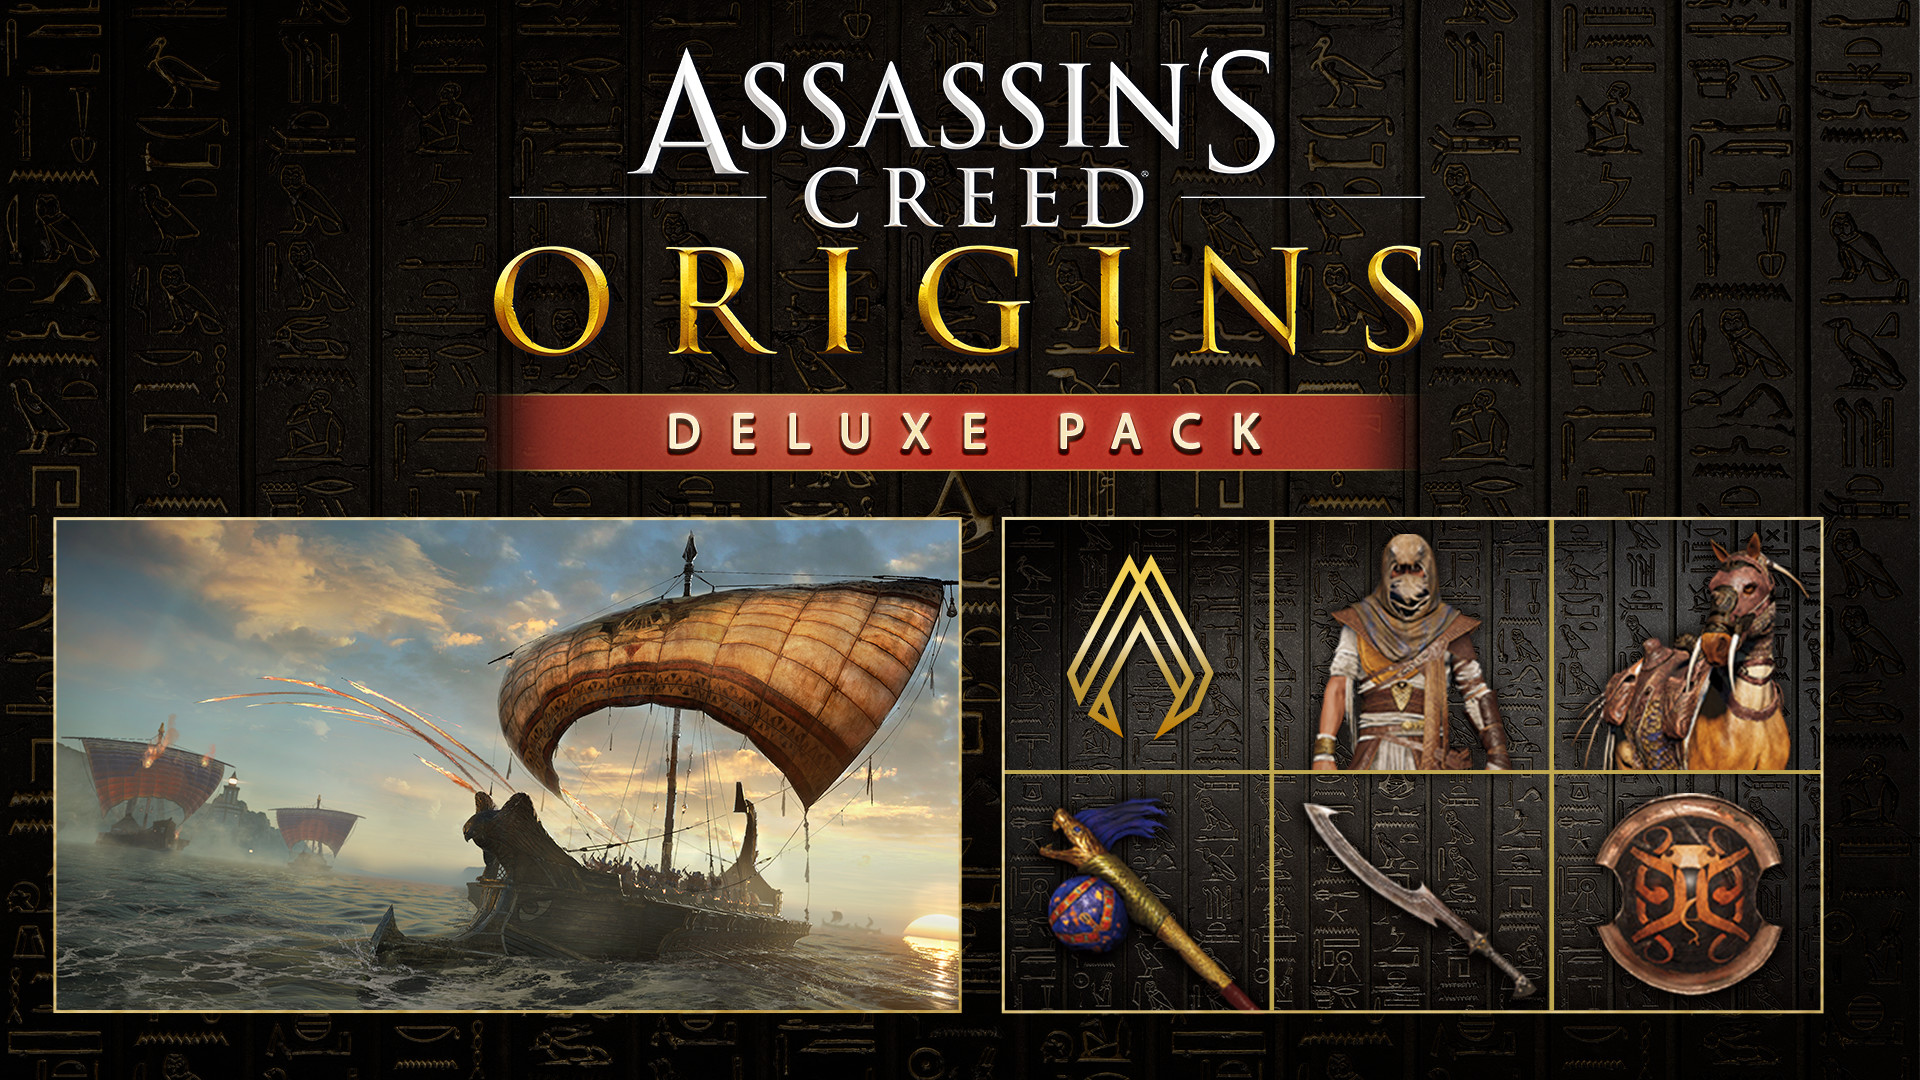 Assassin's Creed® Origins - Deluxe Pack Featured Screenshot #1